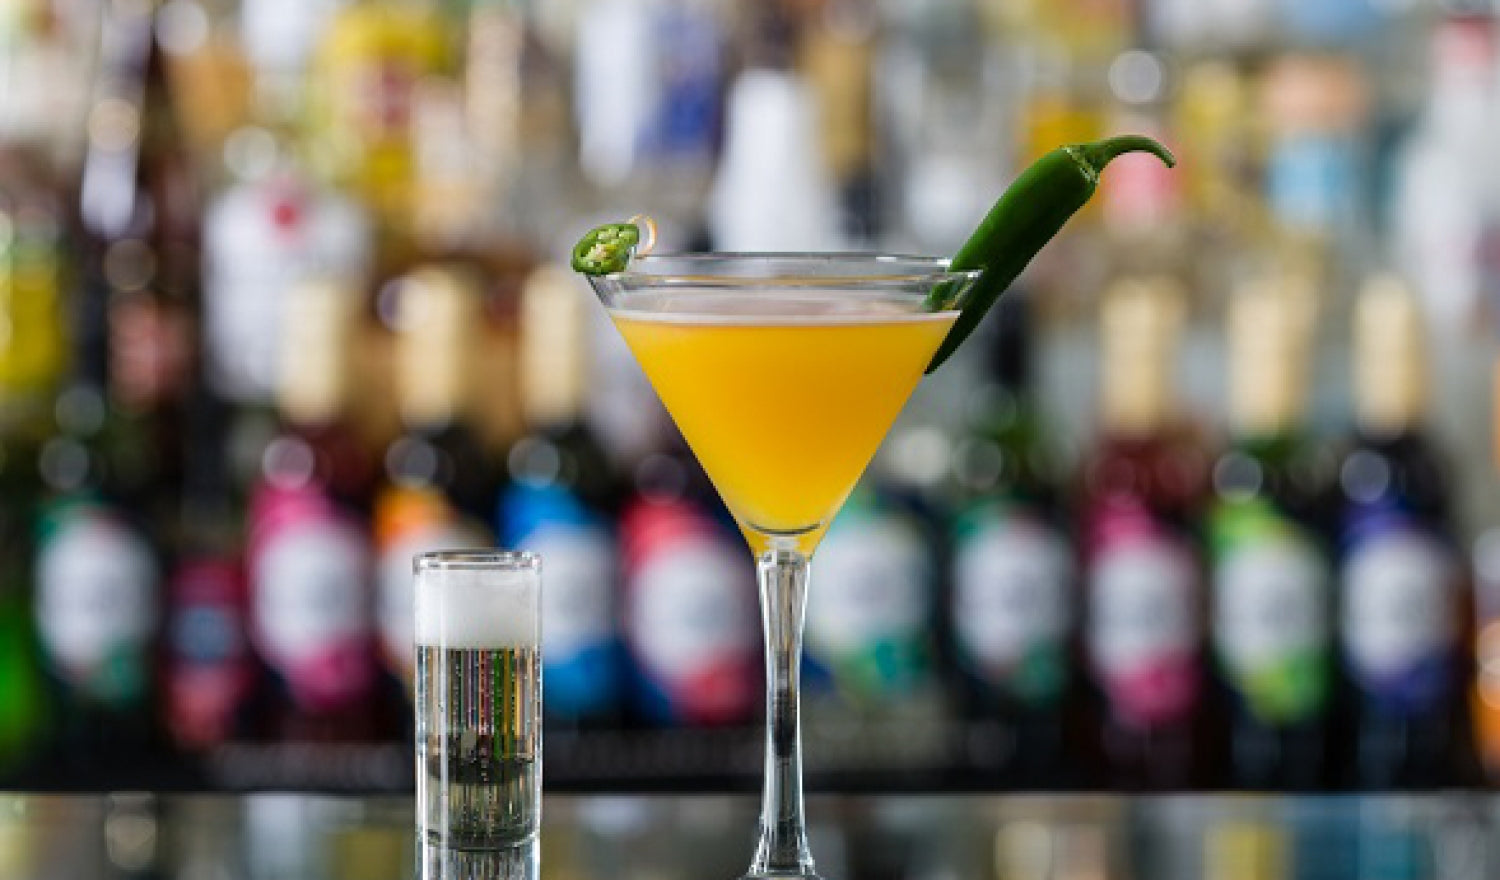 Funkins Hot Pornstar Martini Cocktail Recipe  Sous Chef Uk-6636